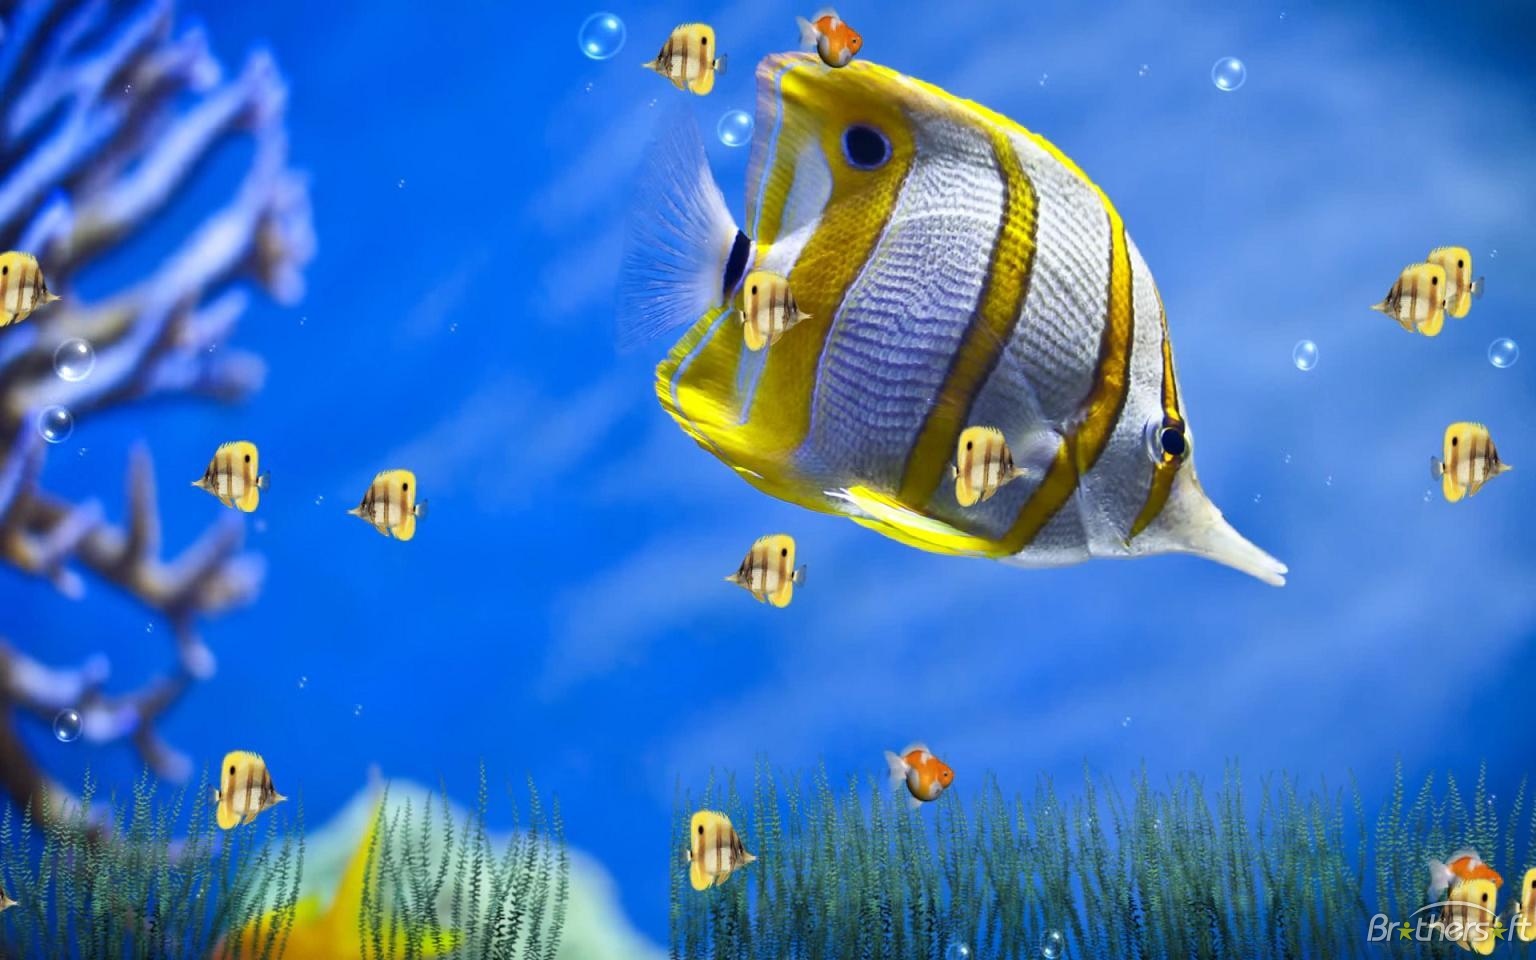  Wallpaper Marine Life Aquarium Animated Wallpaper 10 Download 1536x960